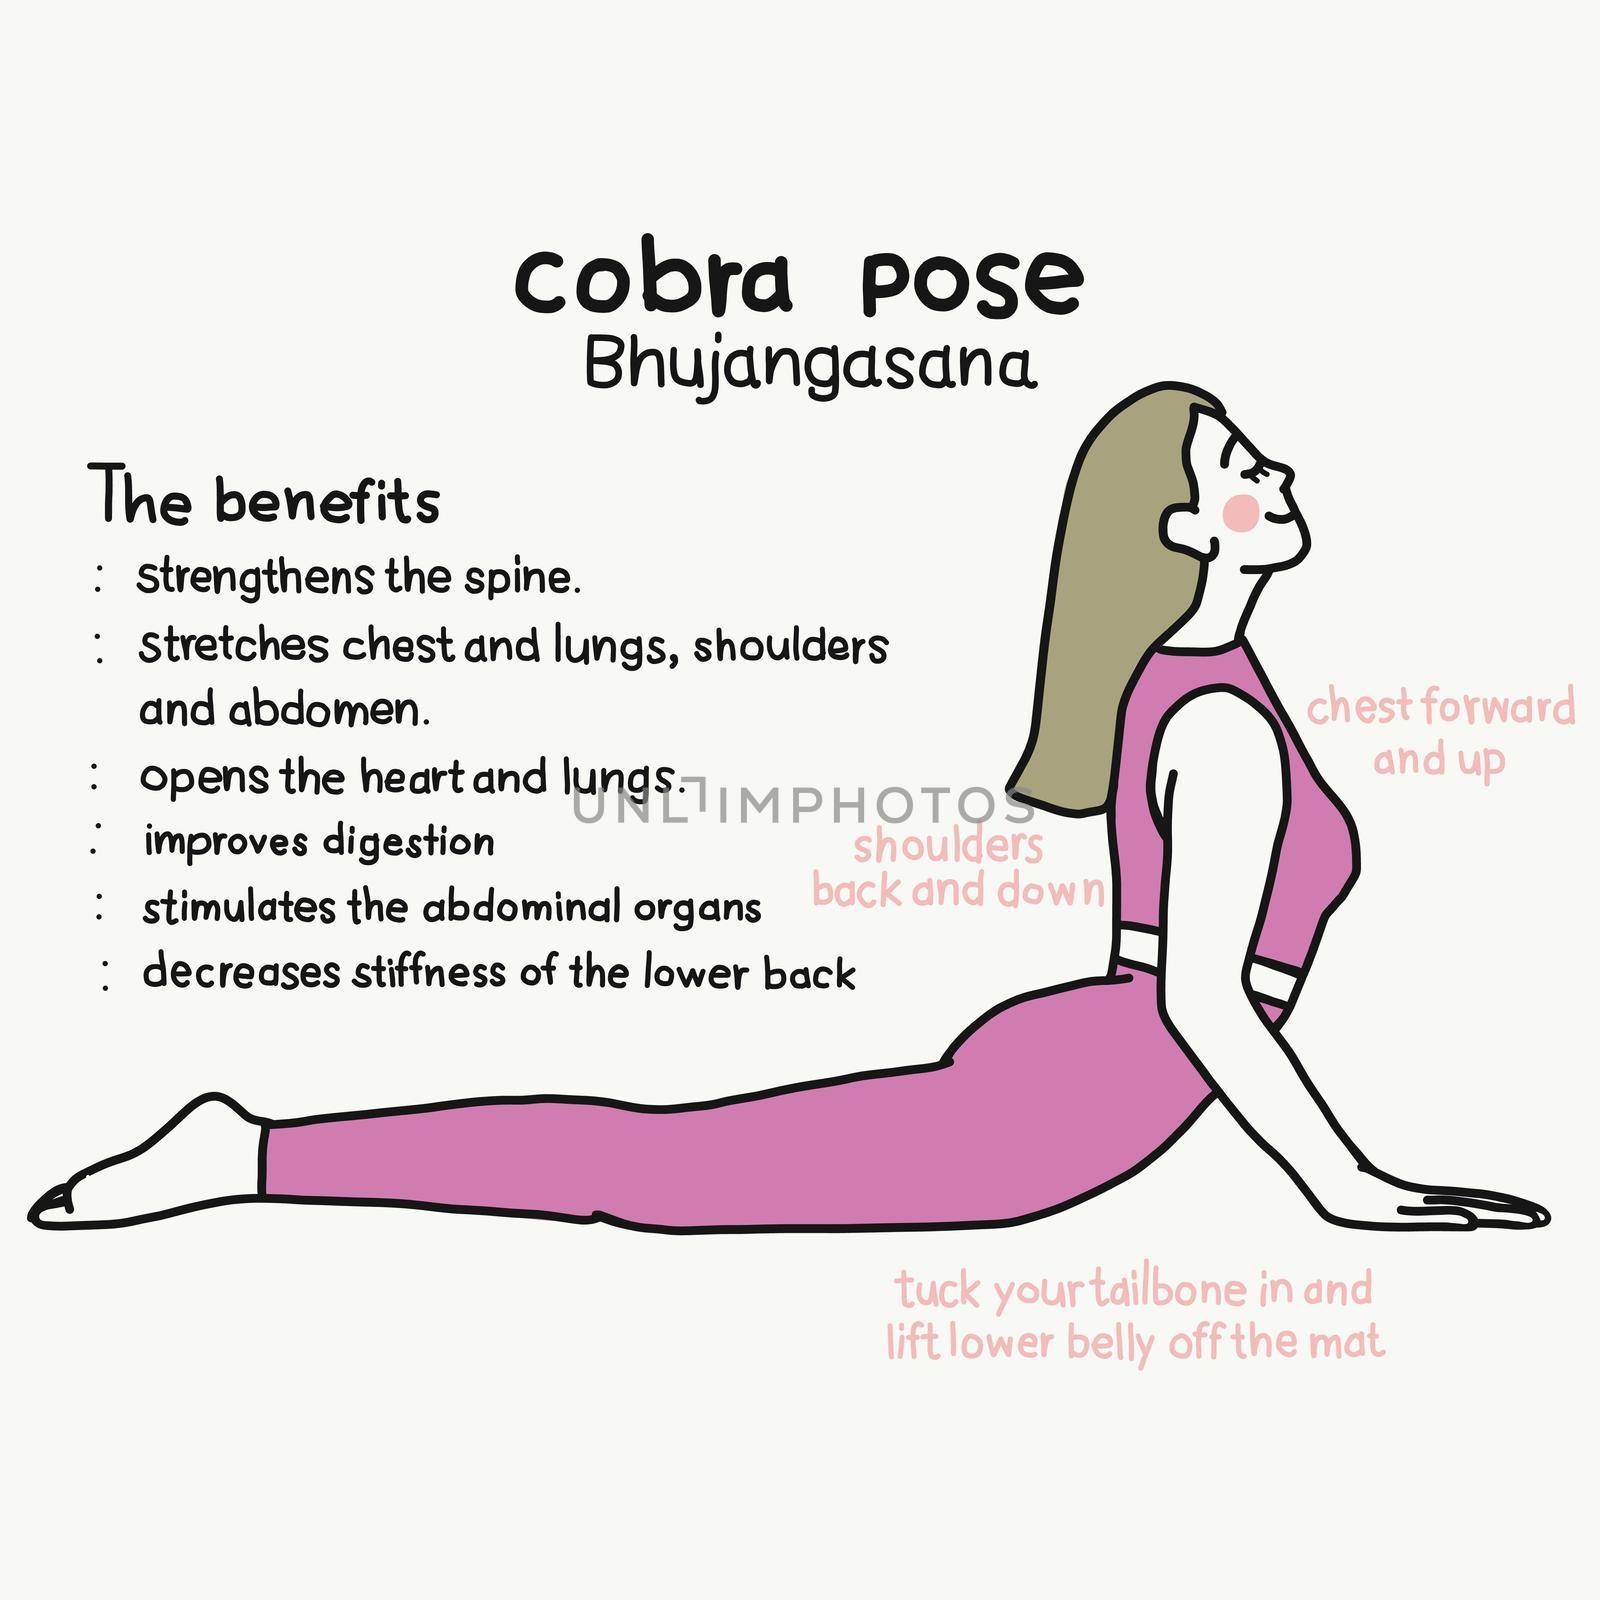 Cobra yoga pose and benefits cartoon vector illustration by Yoopho